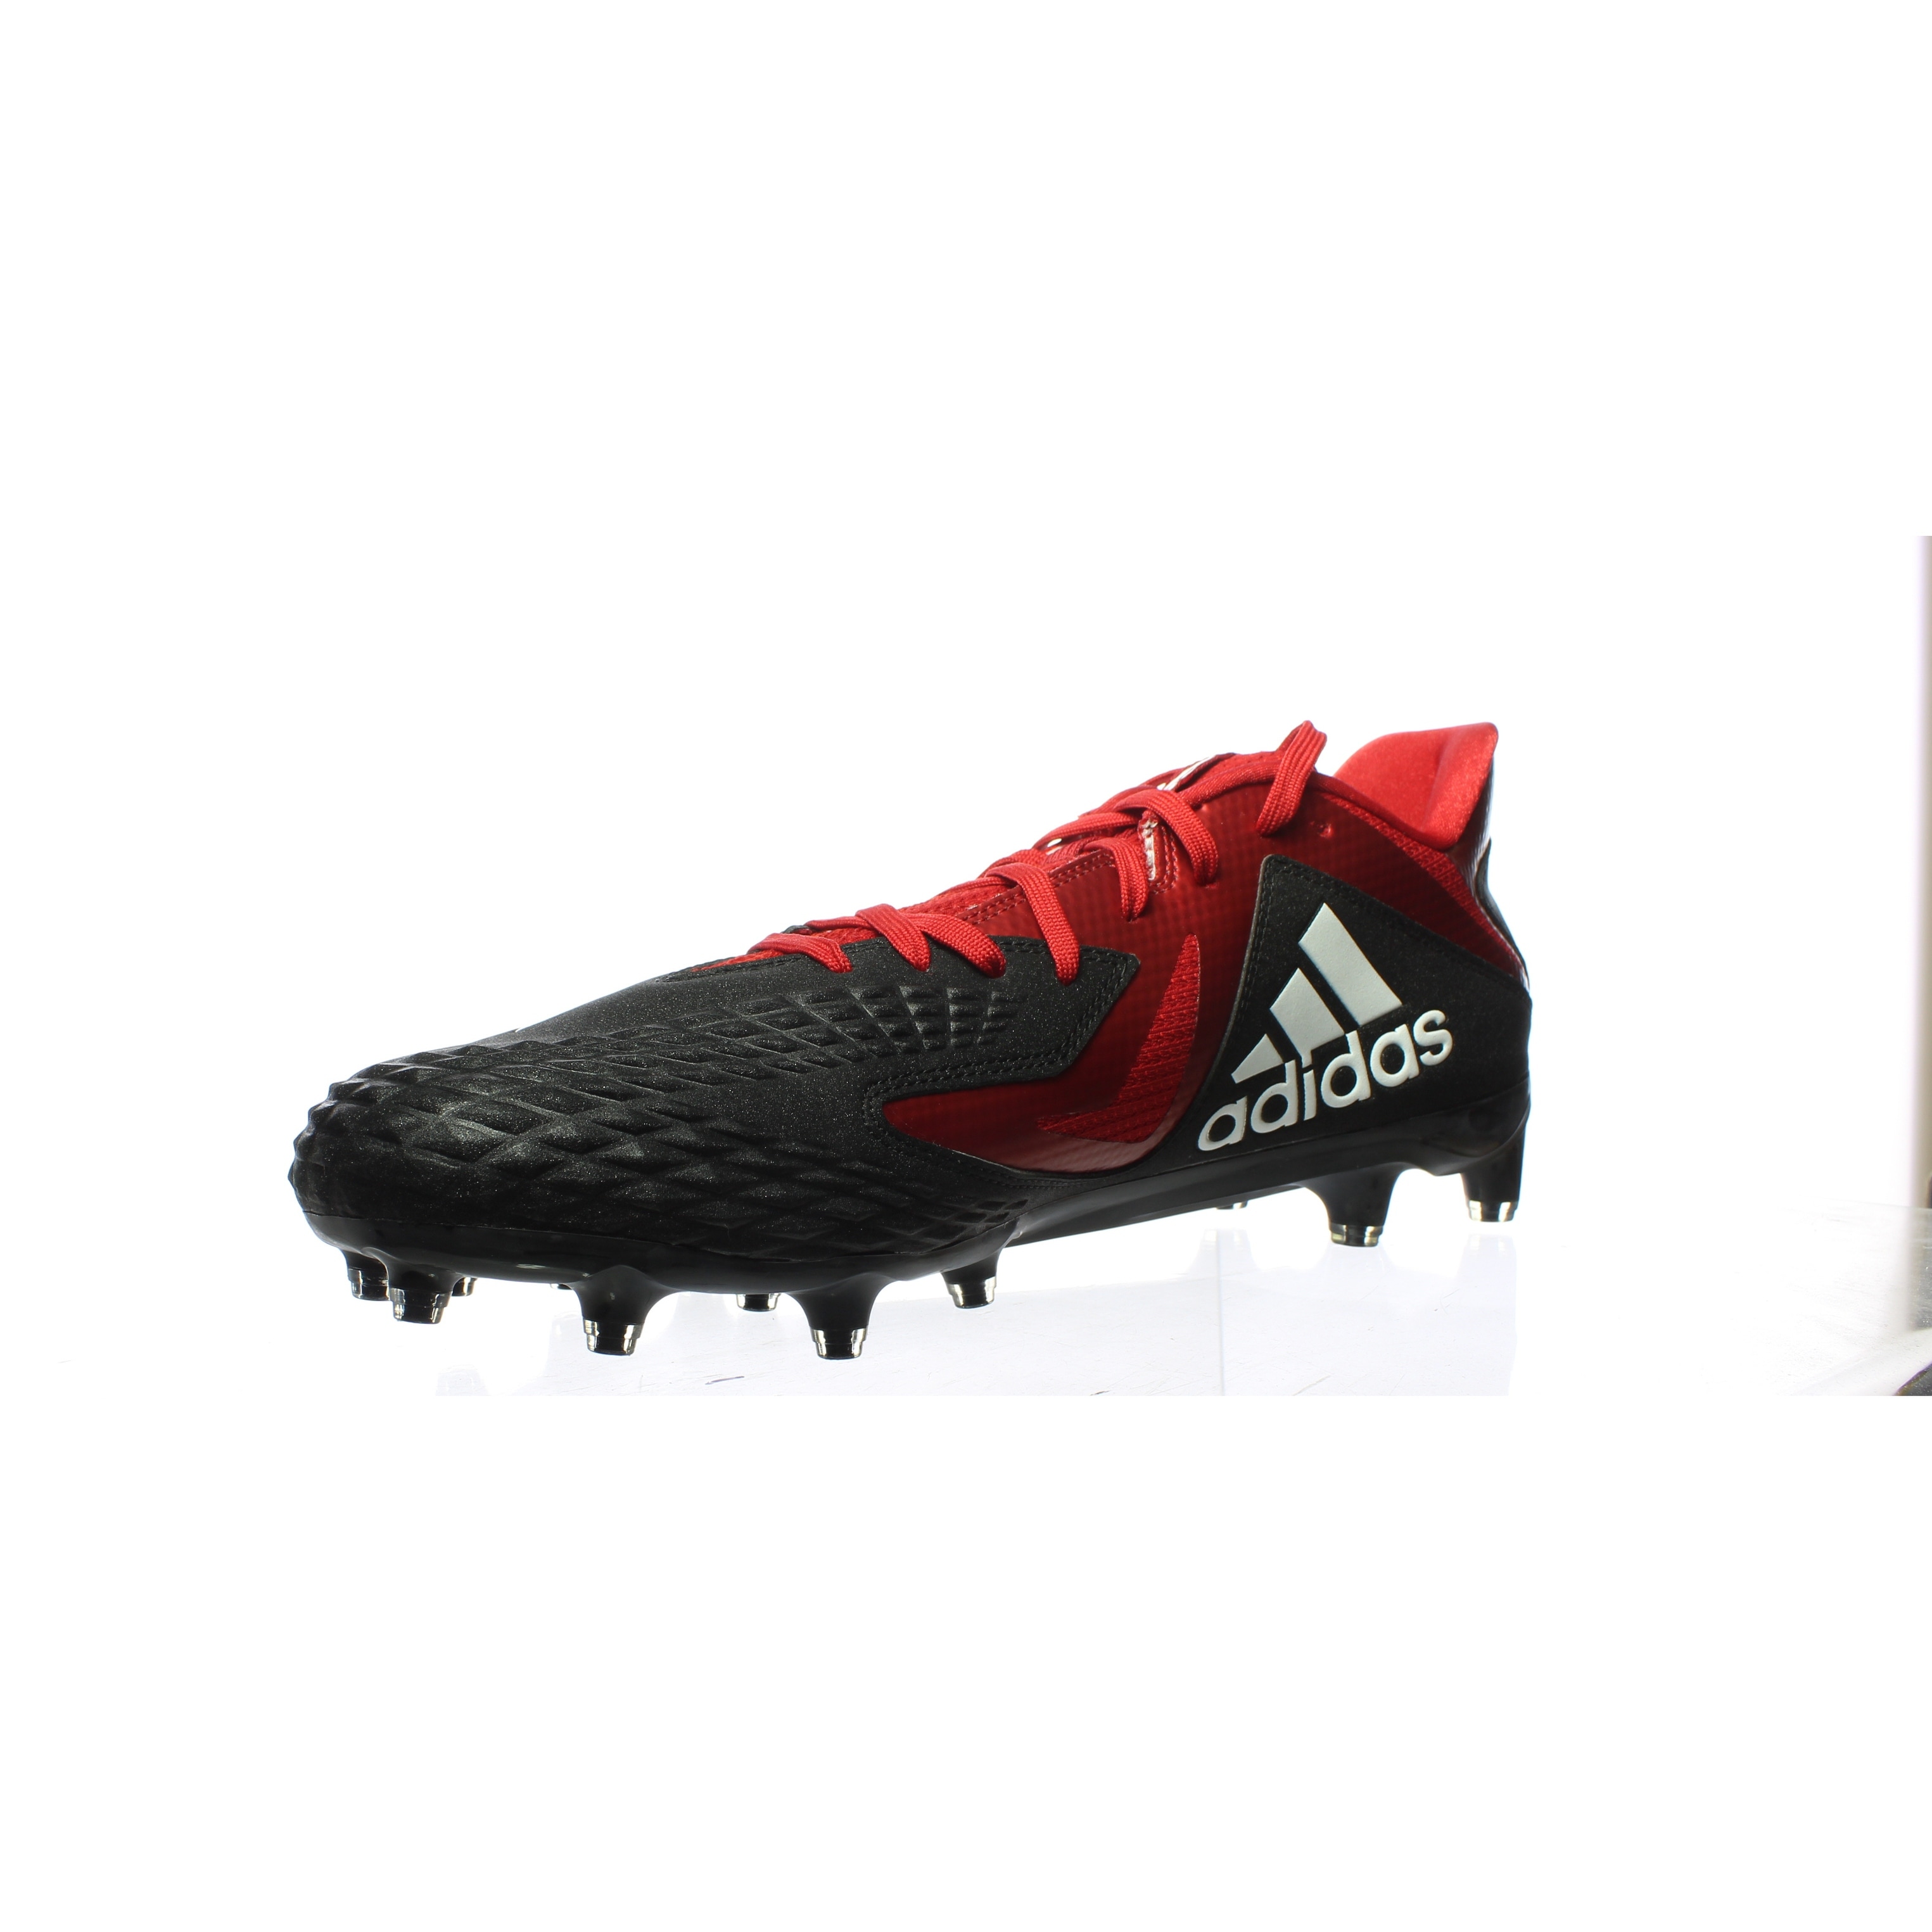 mens adidas football boots size 13